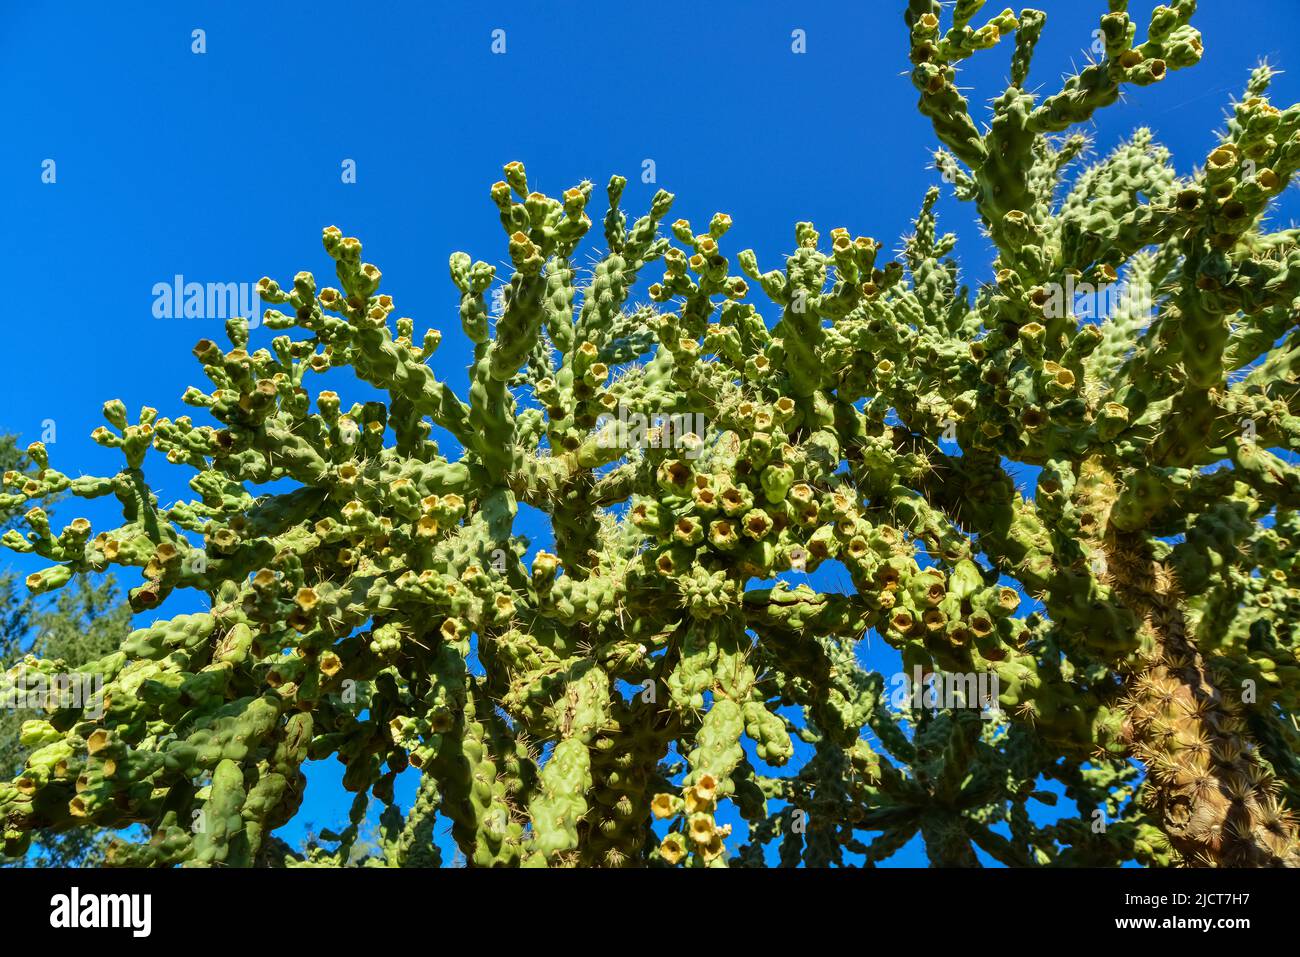 Cactus. Cane Chola Cylindropuntia spinosior on a background of blue sky. Arizona, USA Stock Photo